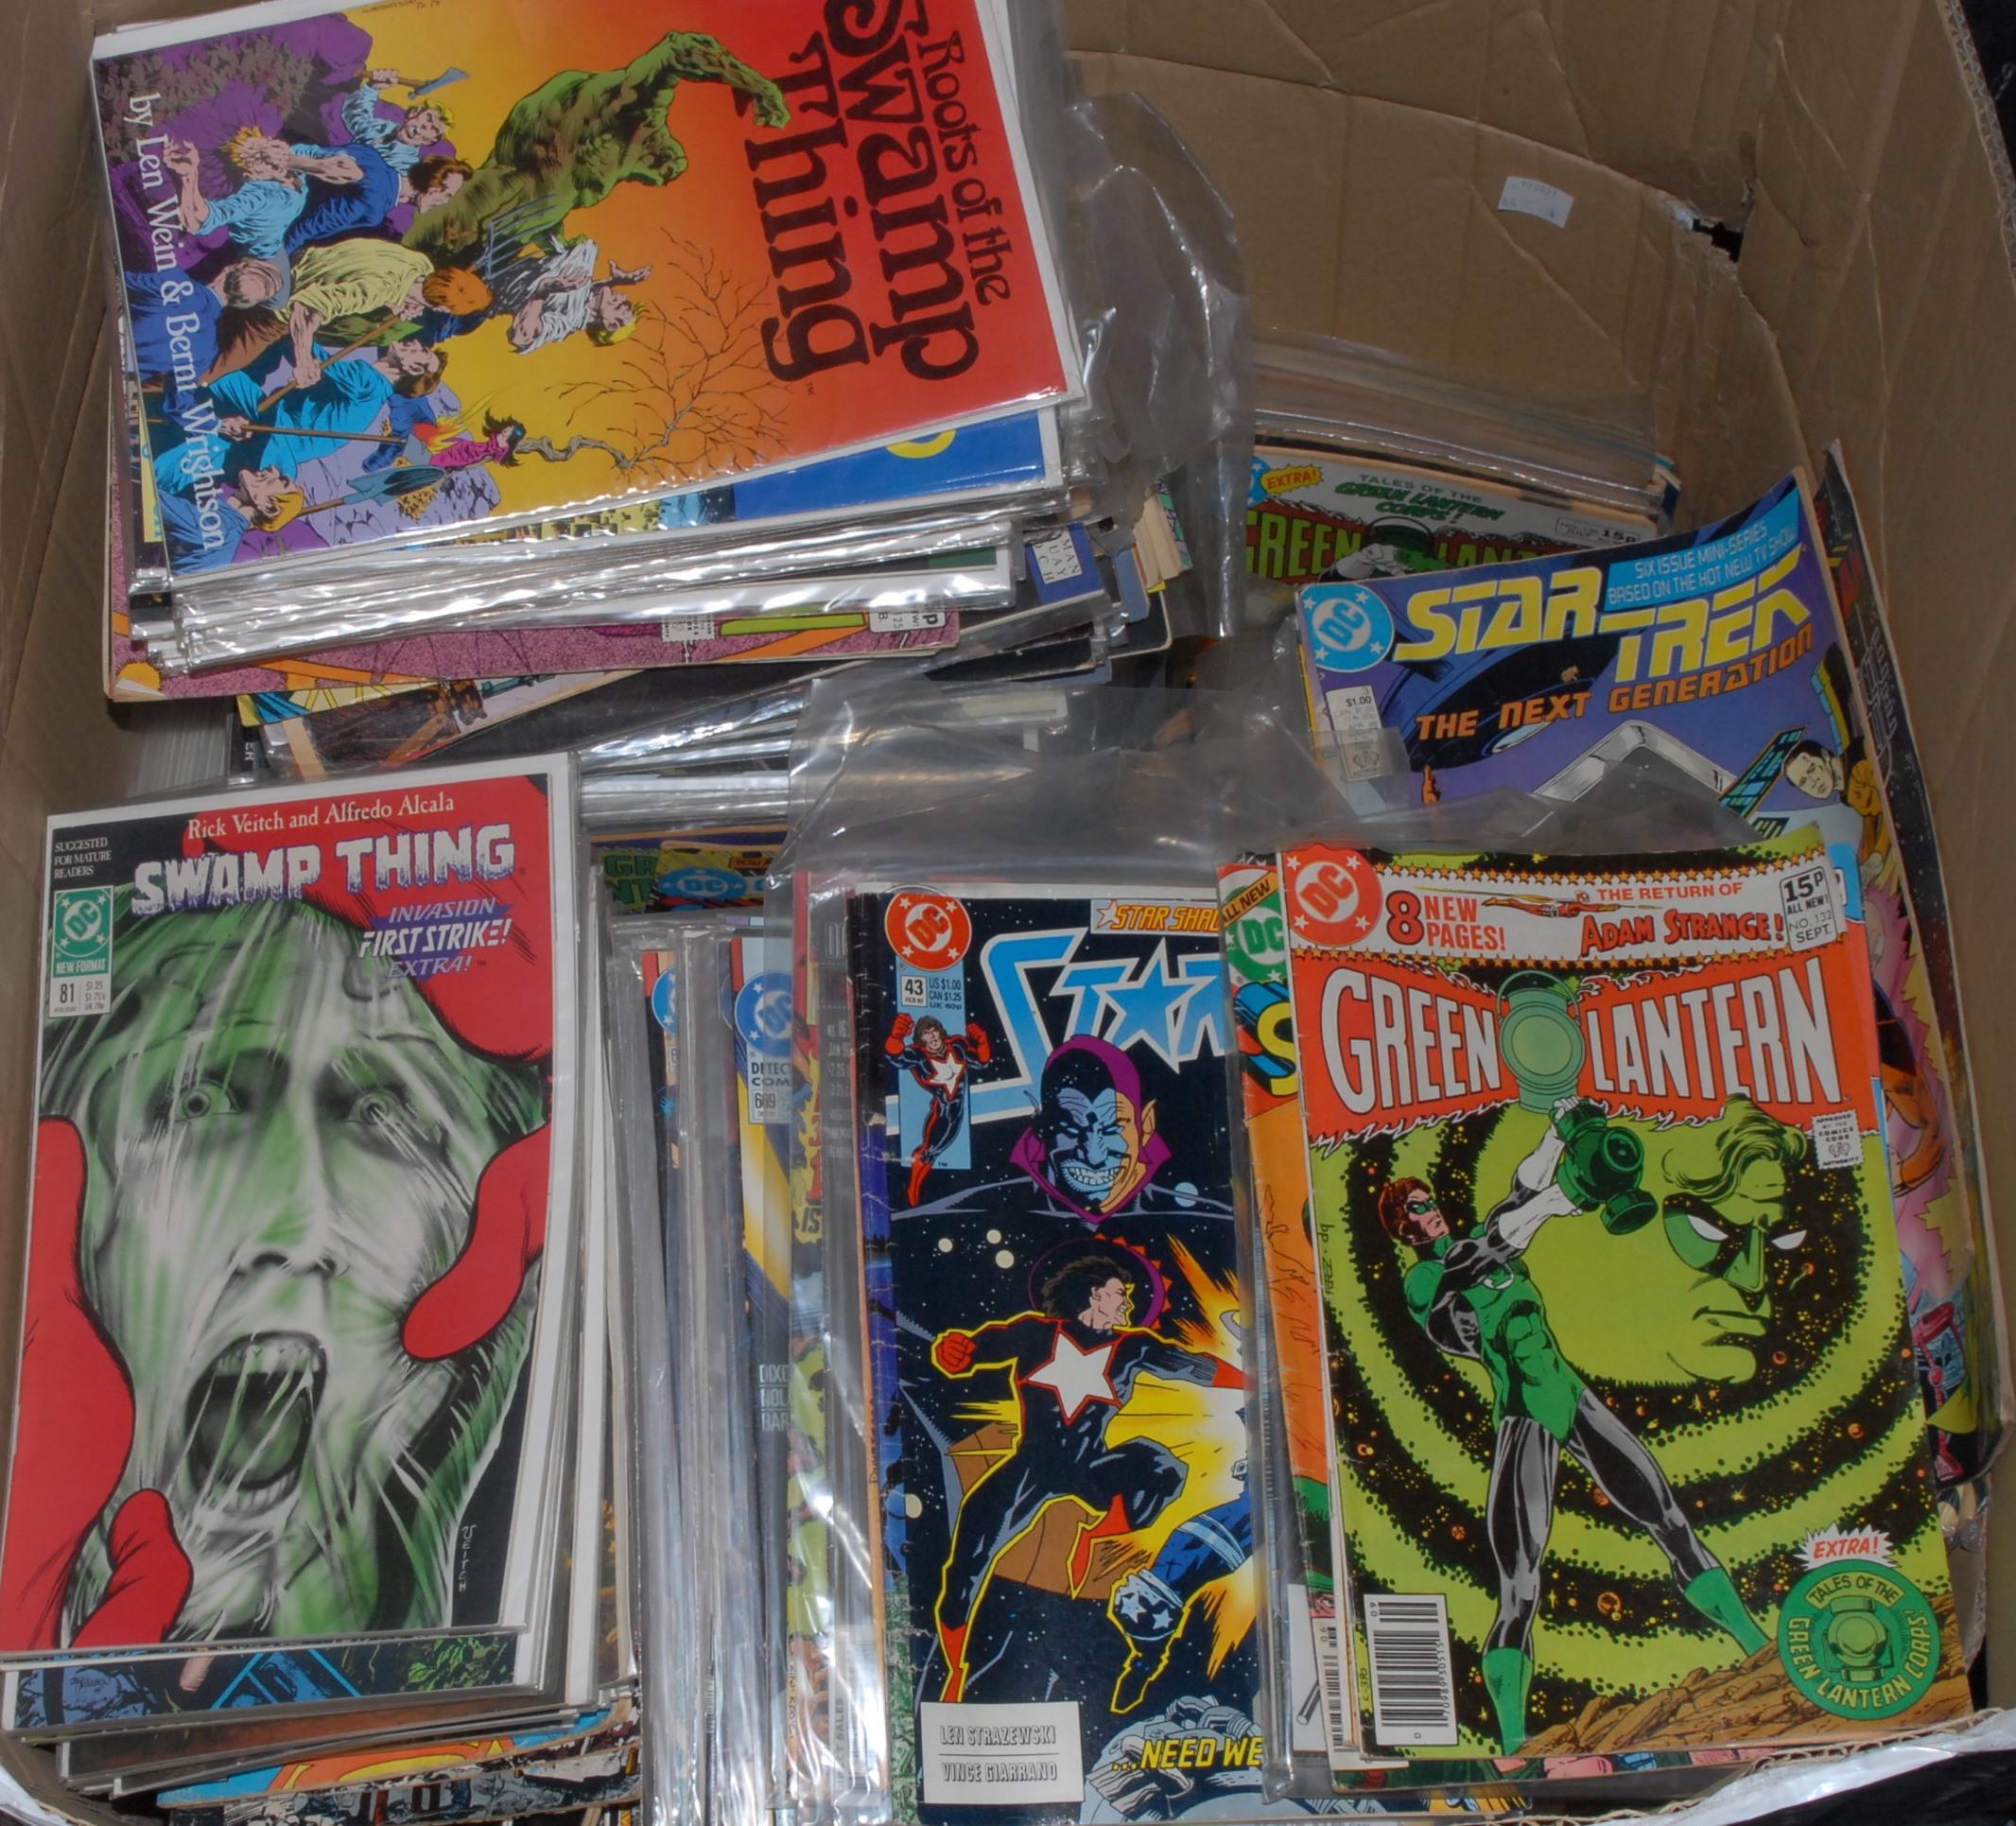 Comic Books - DC, various titles, including Superman, Superman's Pal Jimmy Olsen, Batman, Star